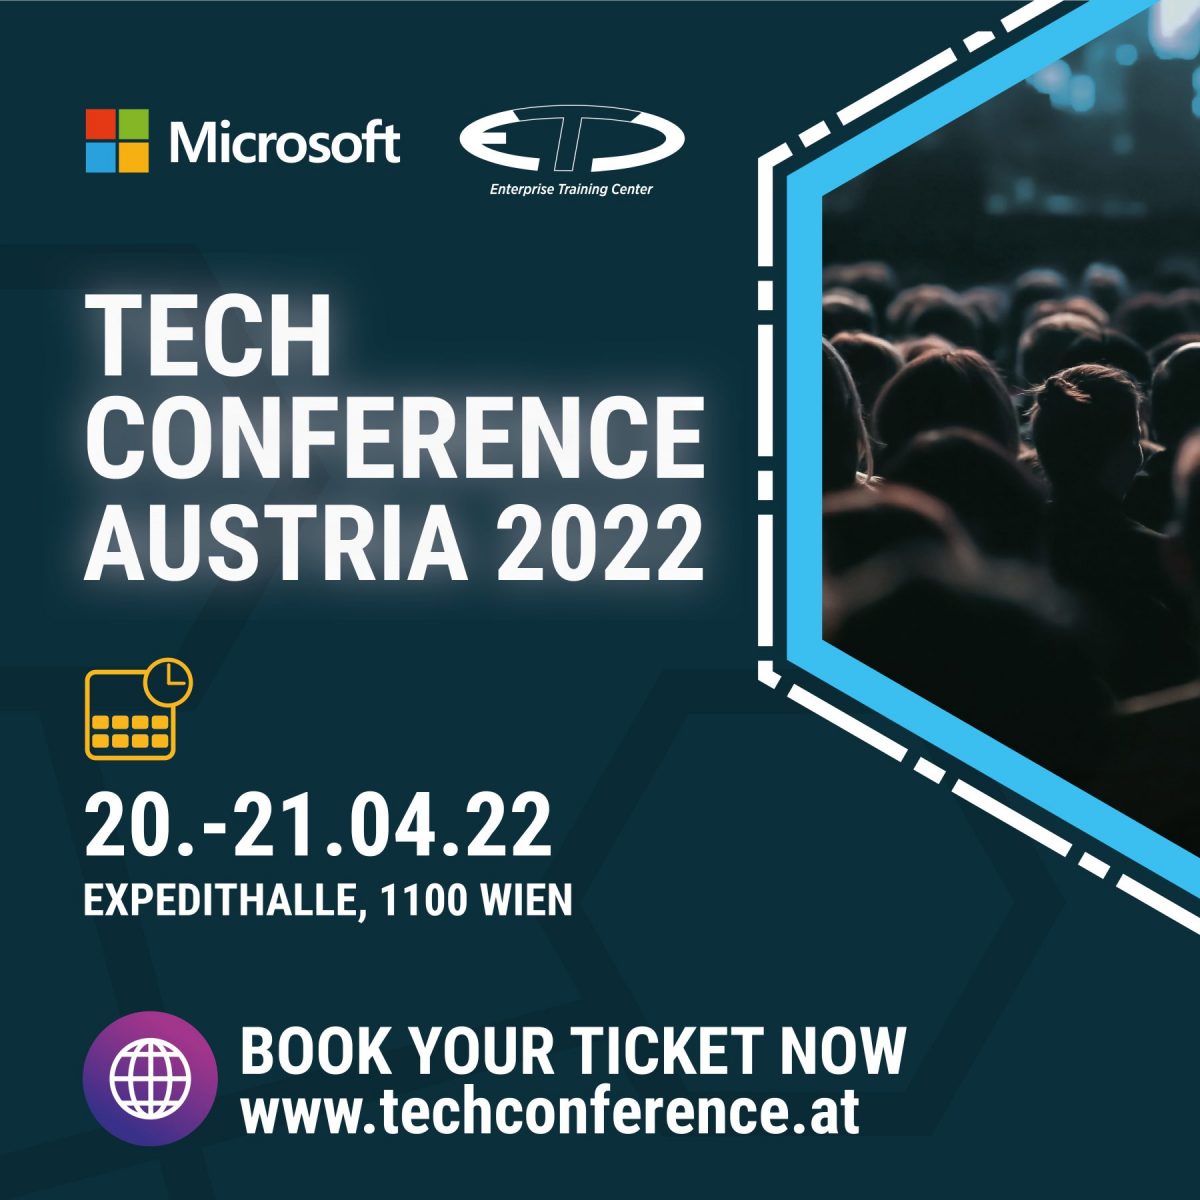 Die Microsoft Tech Conference Austria feiert ihr Comeback